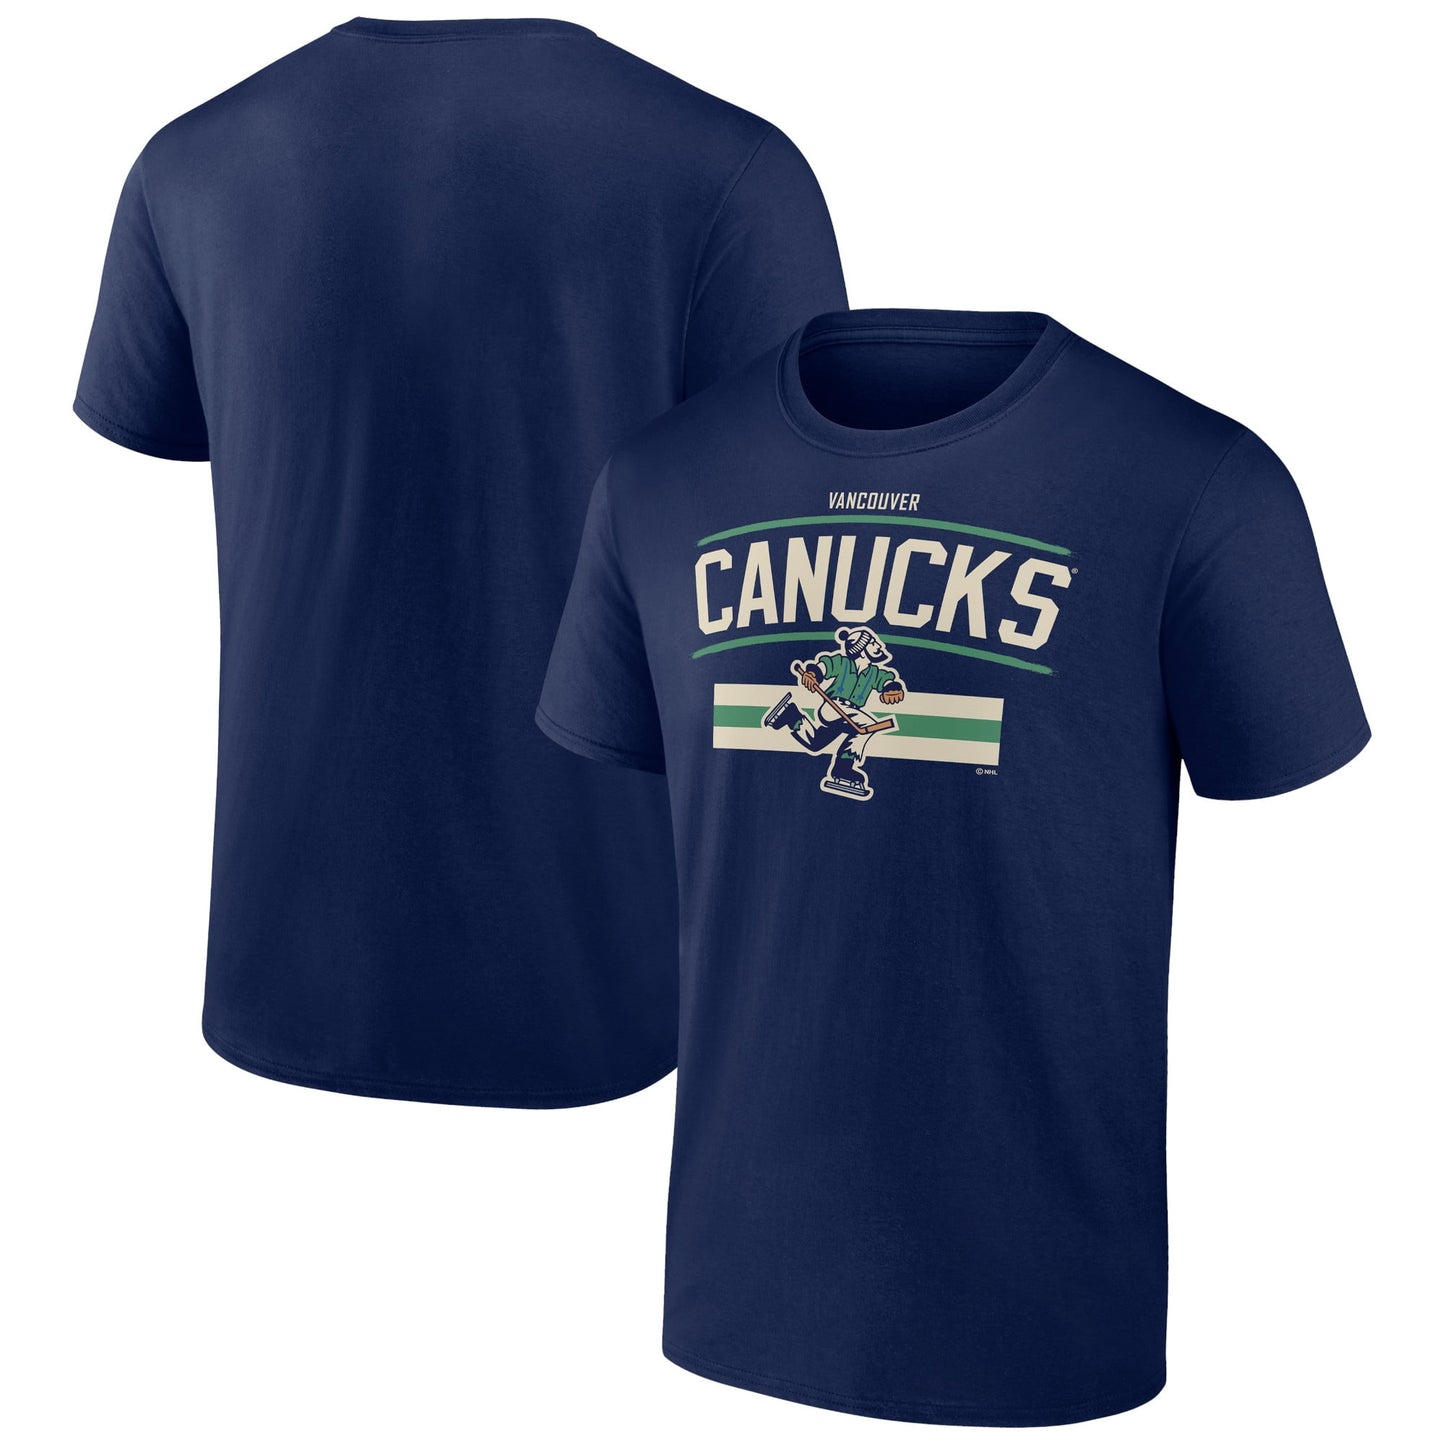 Men's Fanatics Branded Navy Vancouver Canucks Team Jersey Inspired T-Shirt